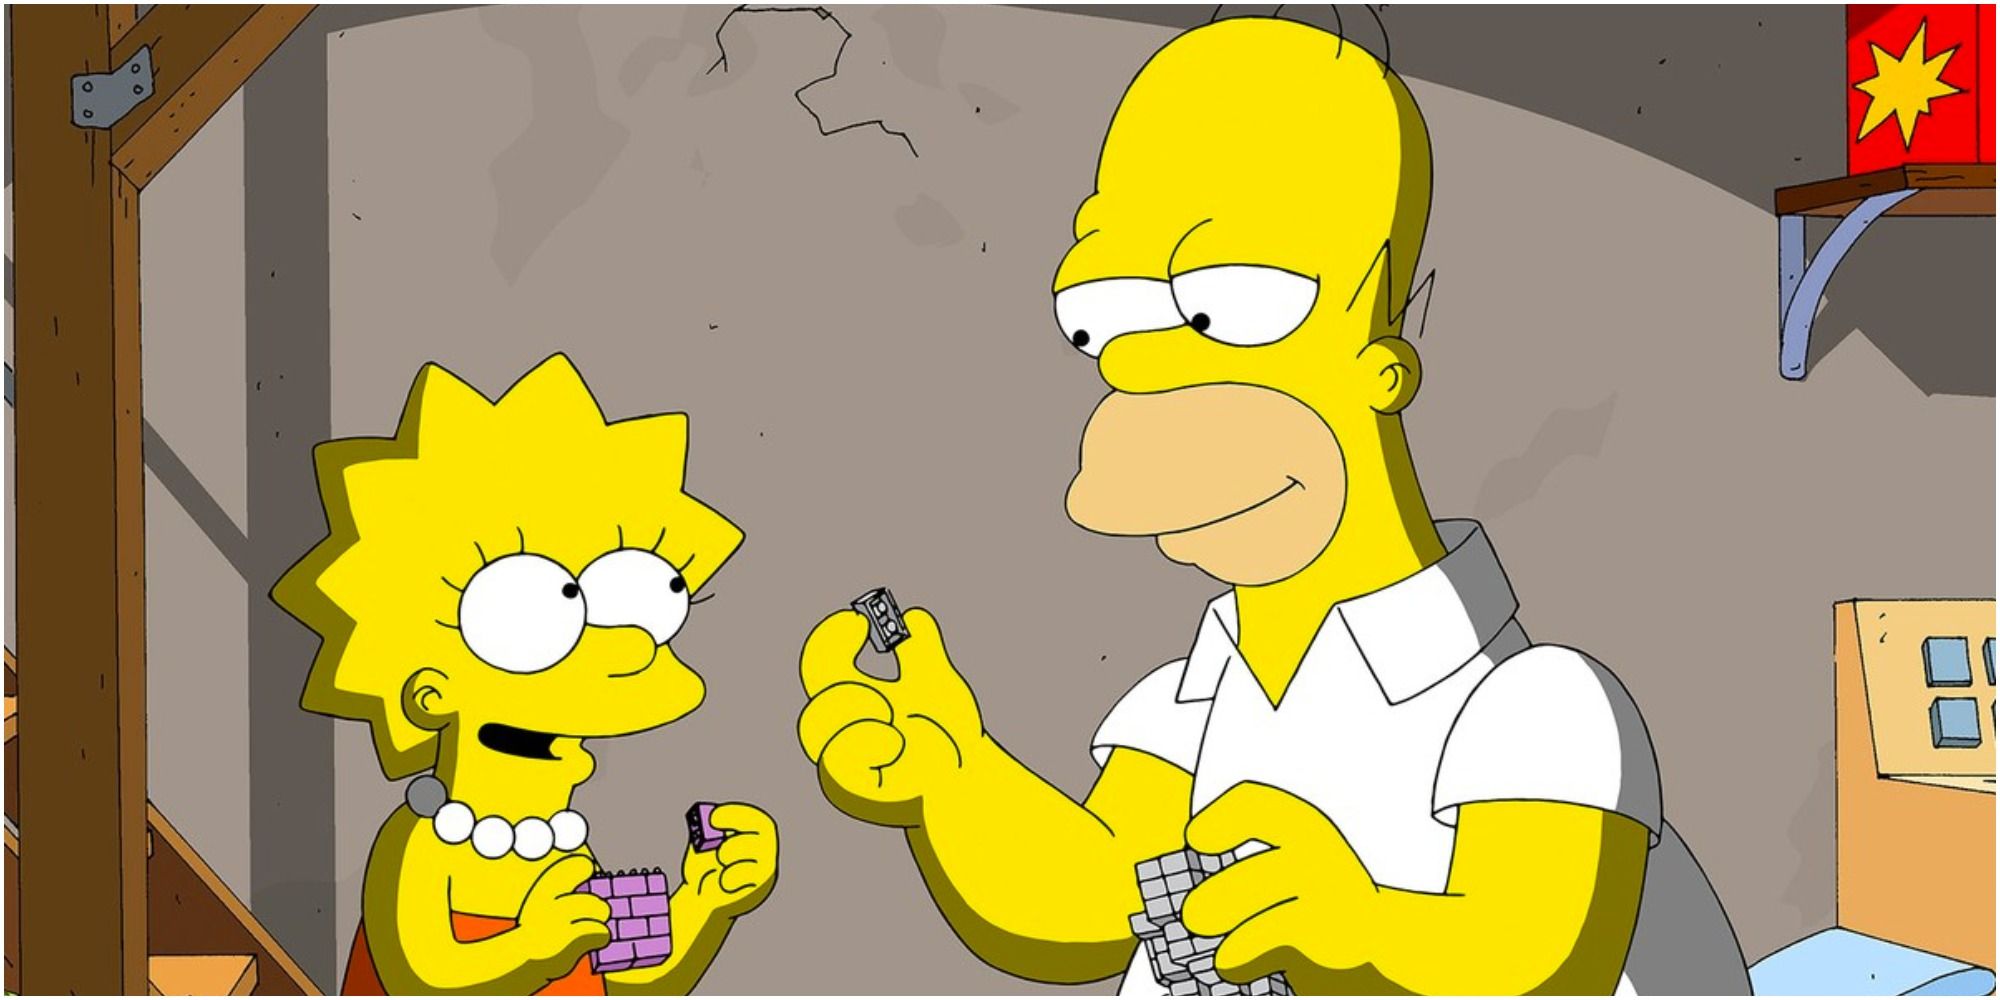 Homer and Lisa Simpson setting up Lego bricks